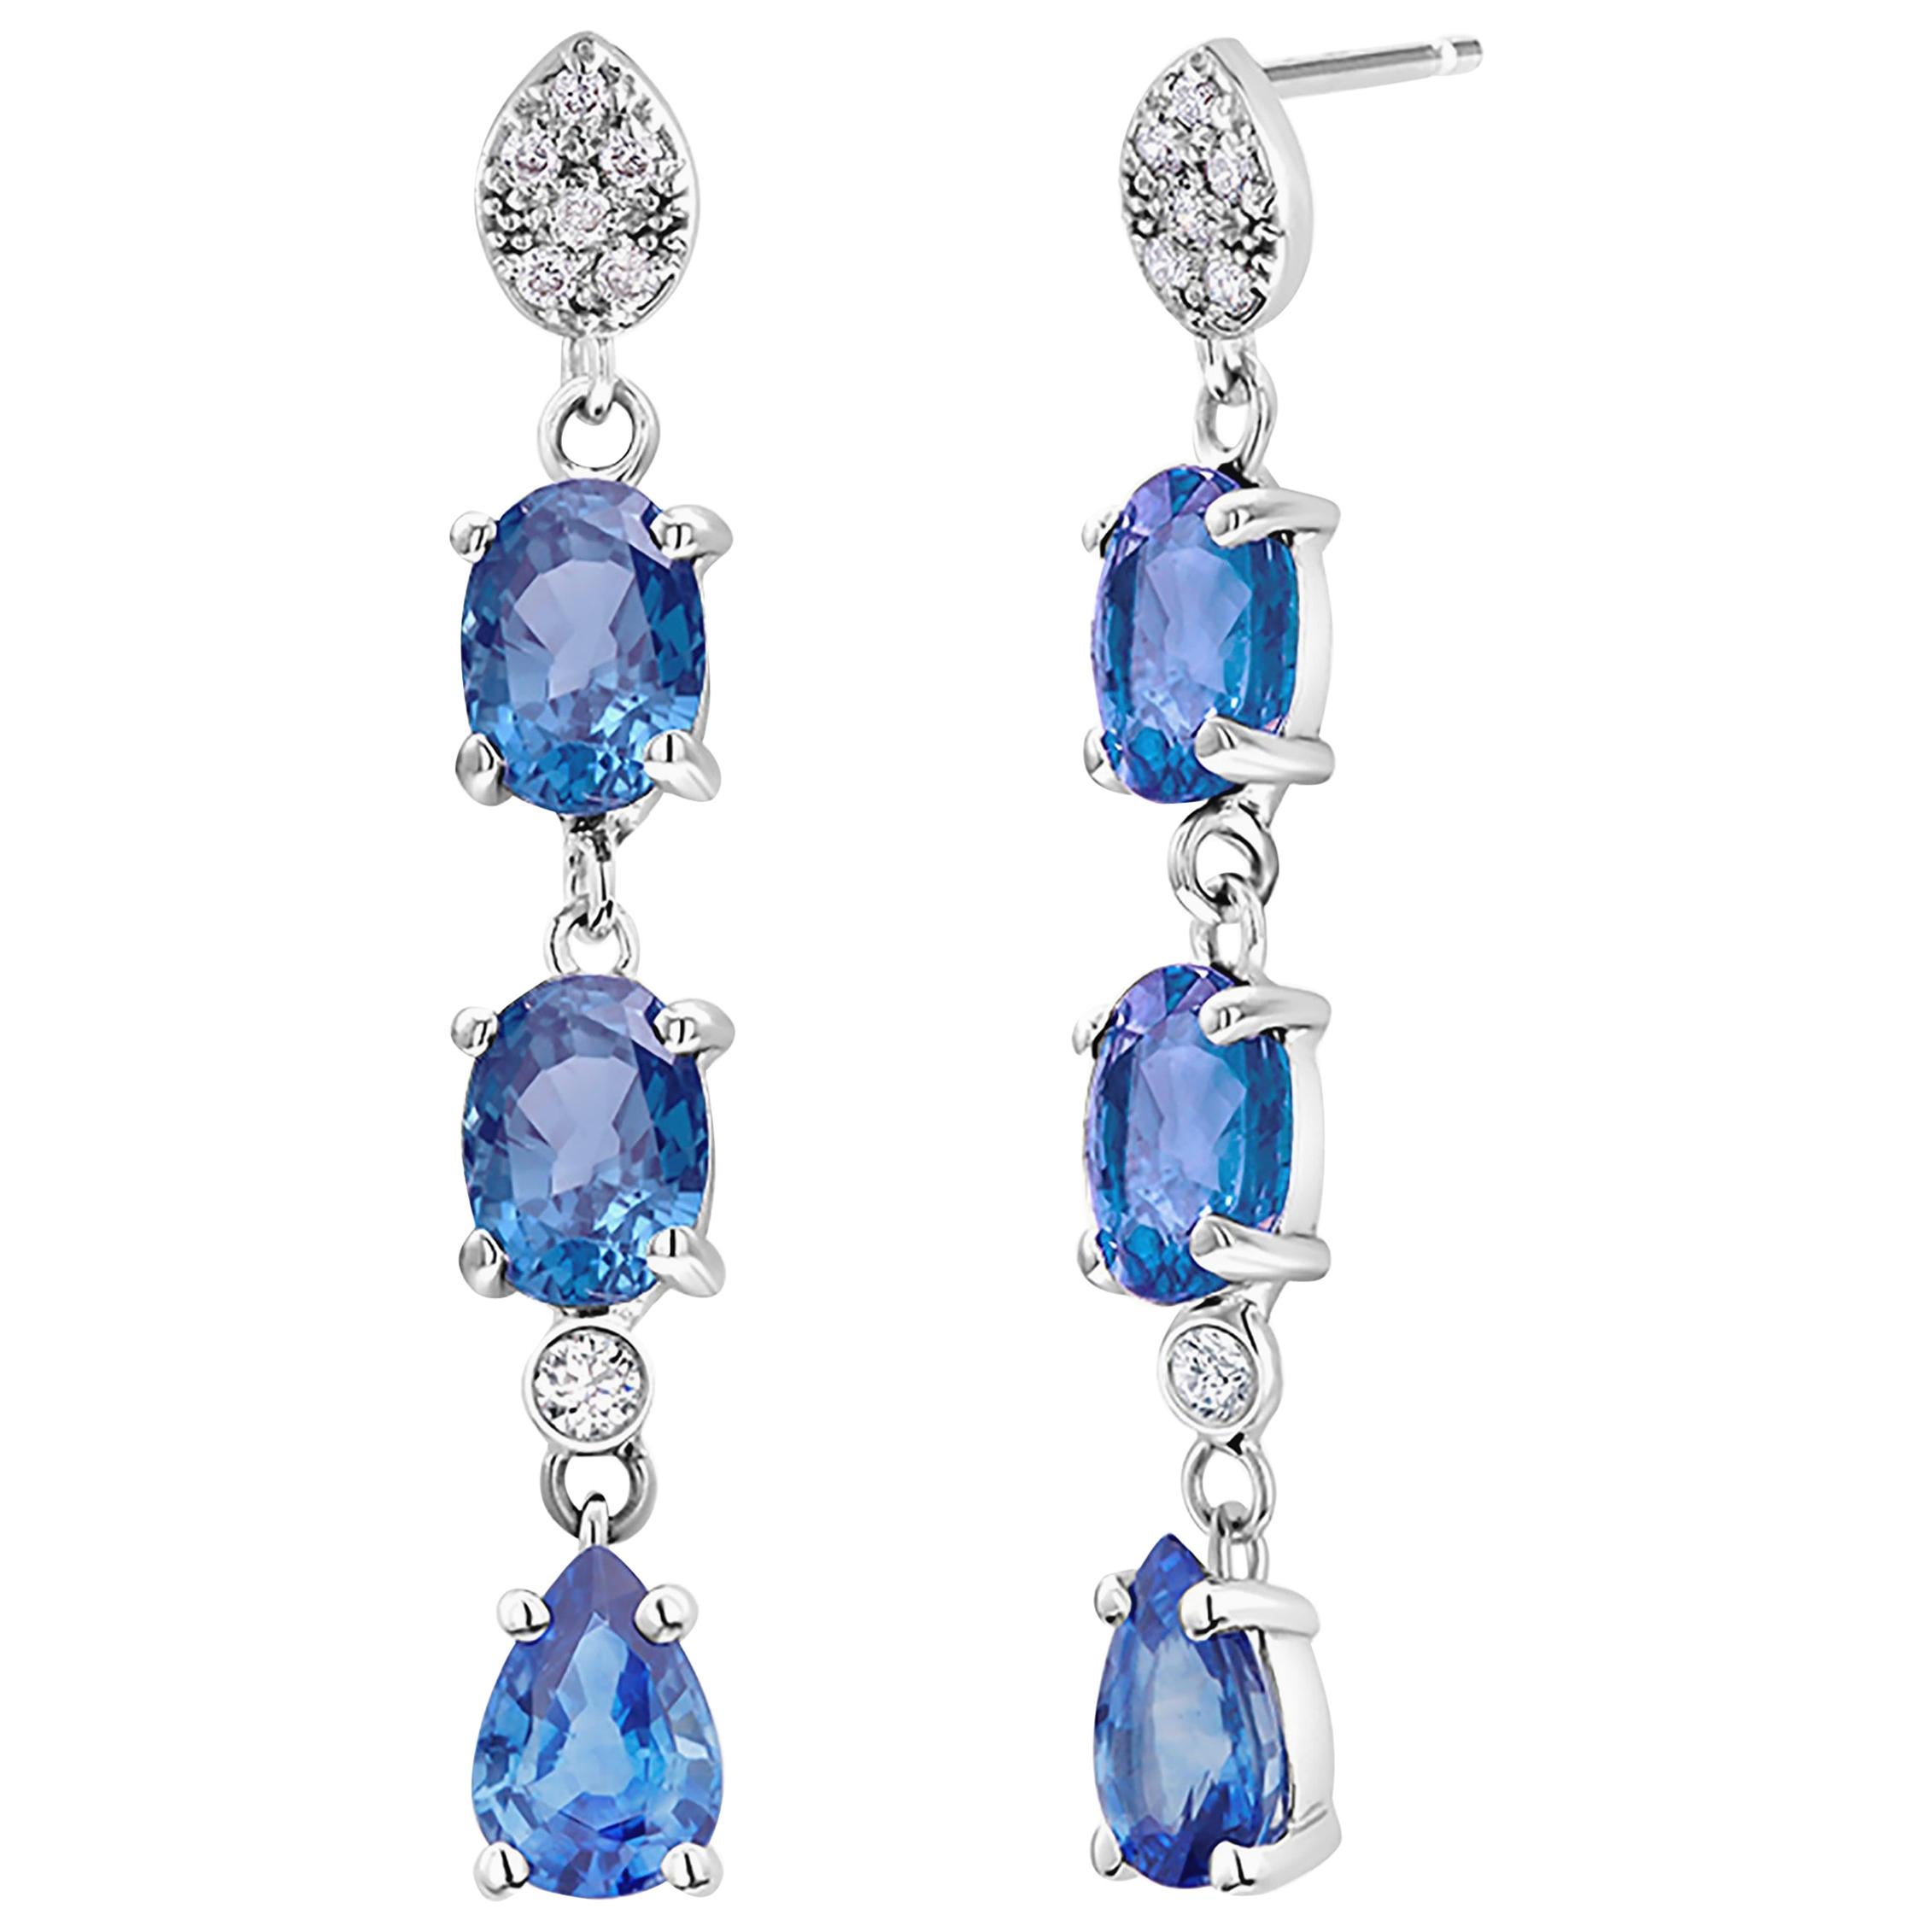 Triple Tier Ceylon Cornflower Blue Sapphires and Diamonds Drop Earrings